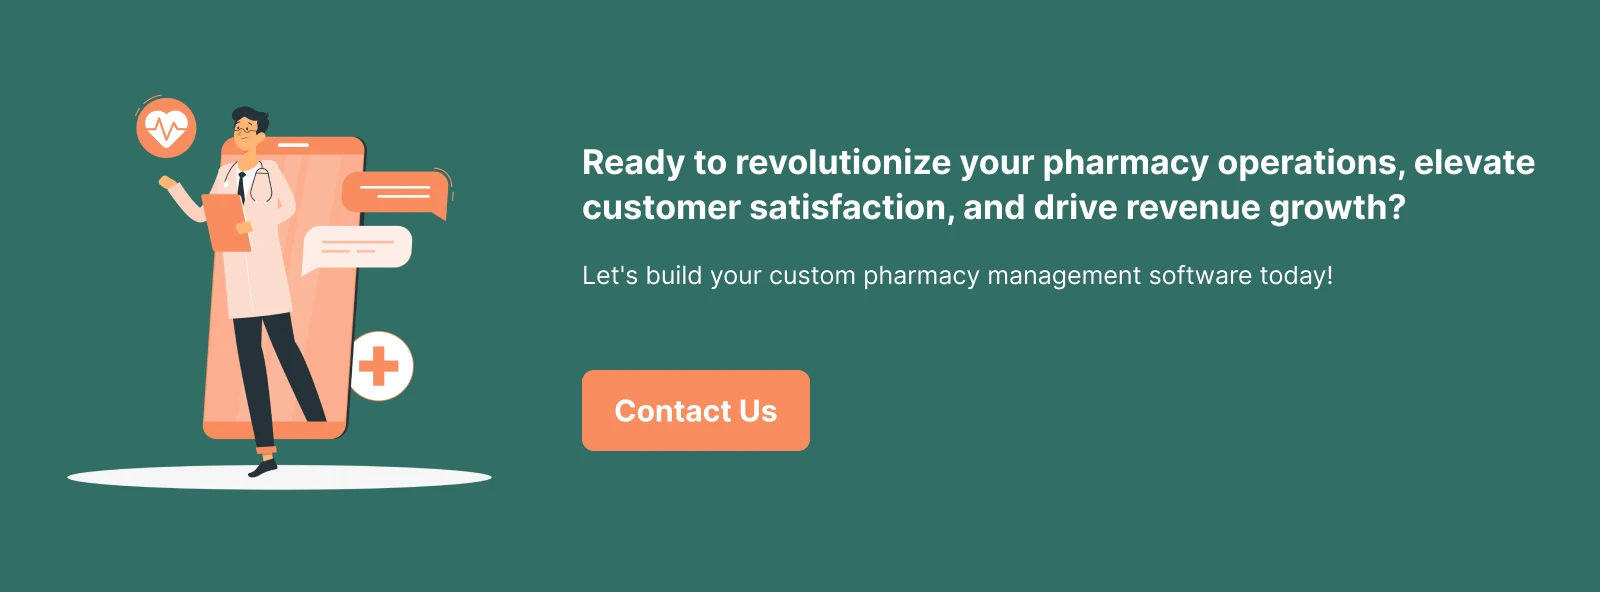 custom pharmacy management software development - Contact us